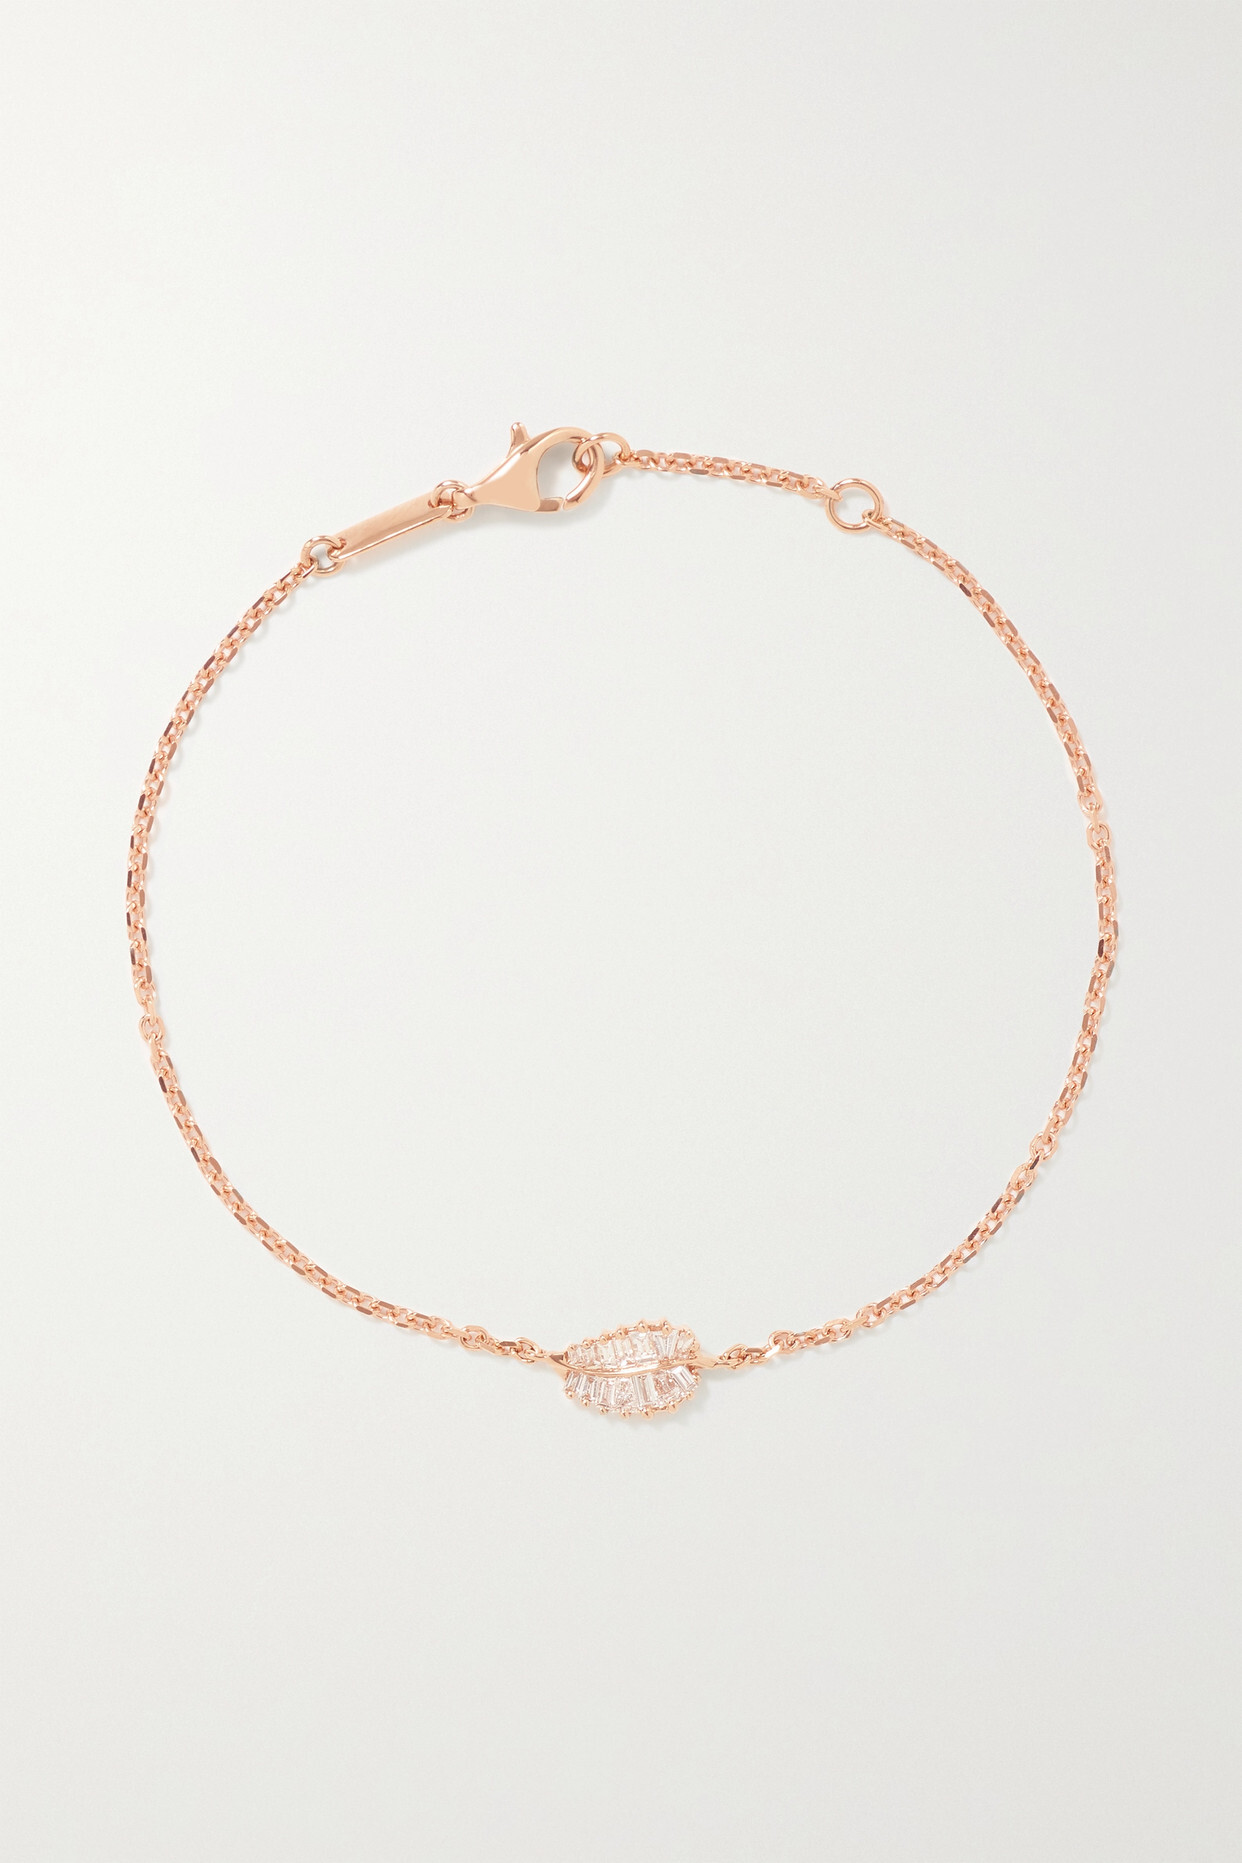 Anita Ko - Palm Leaf 18-karat Rose Gold Diamond Bracelet - one size